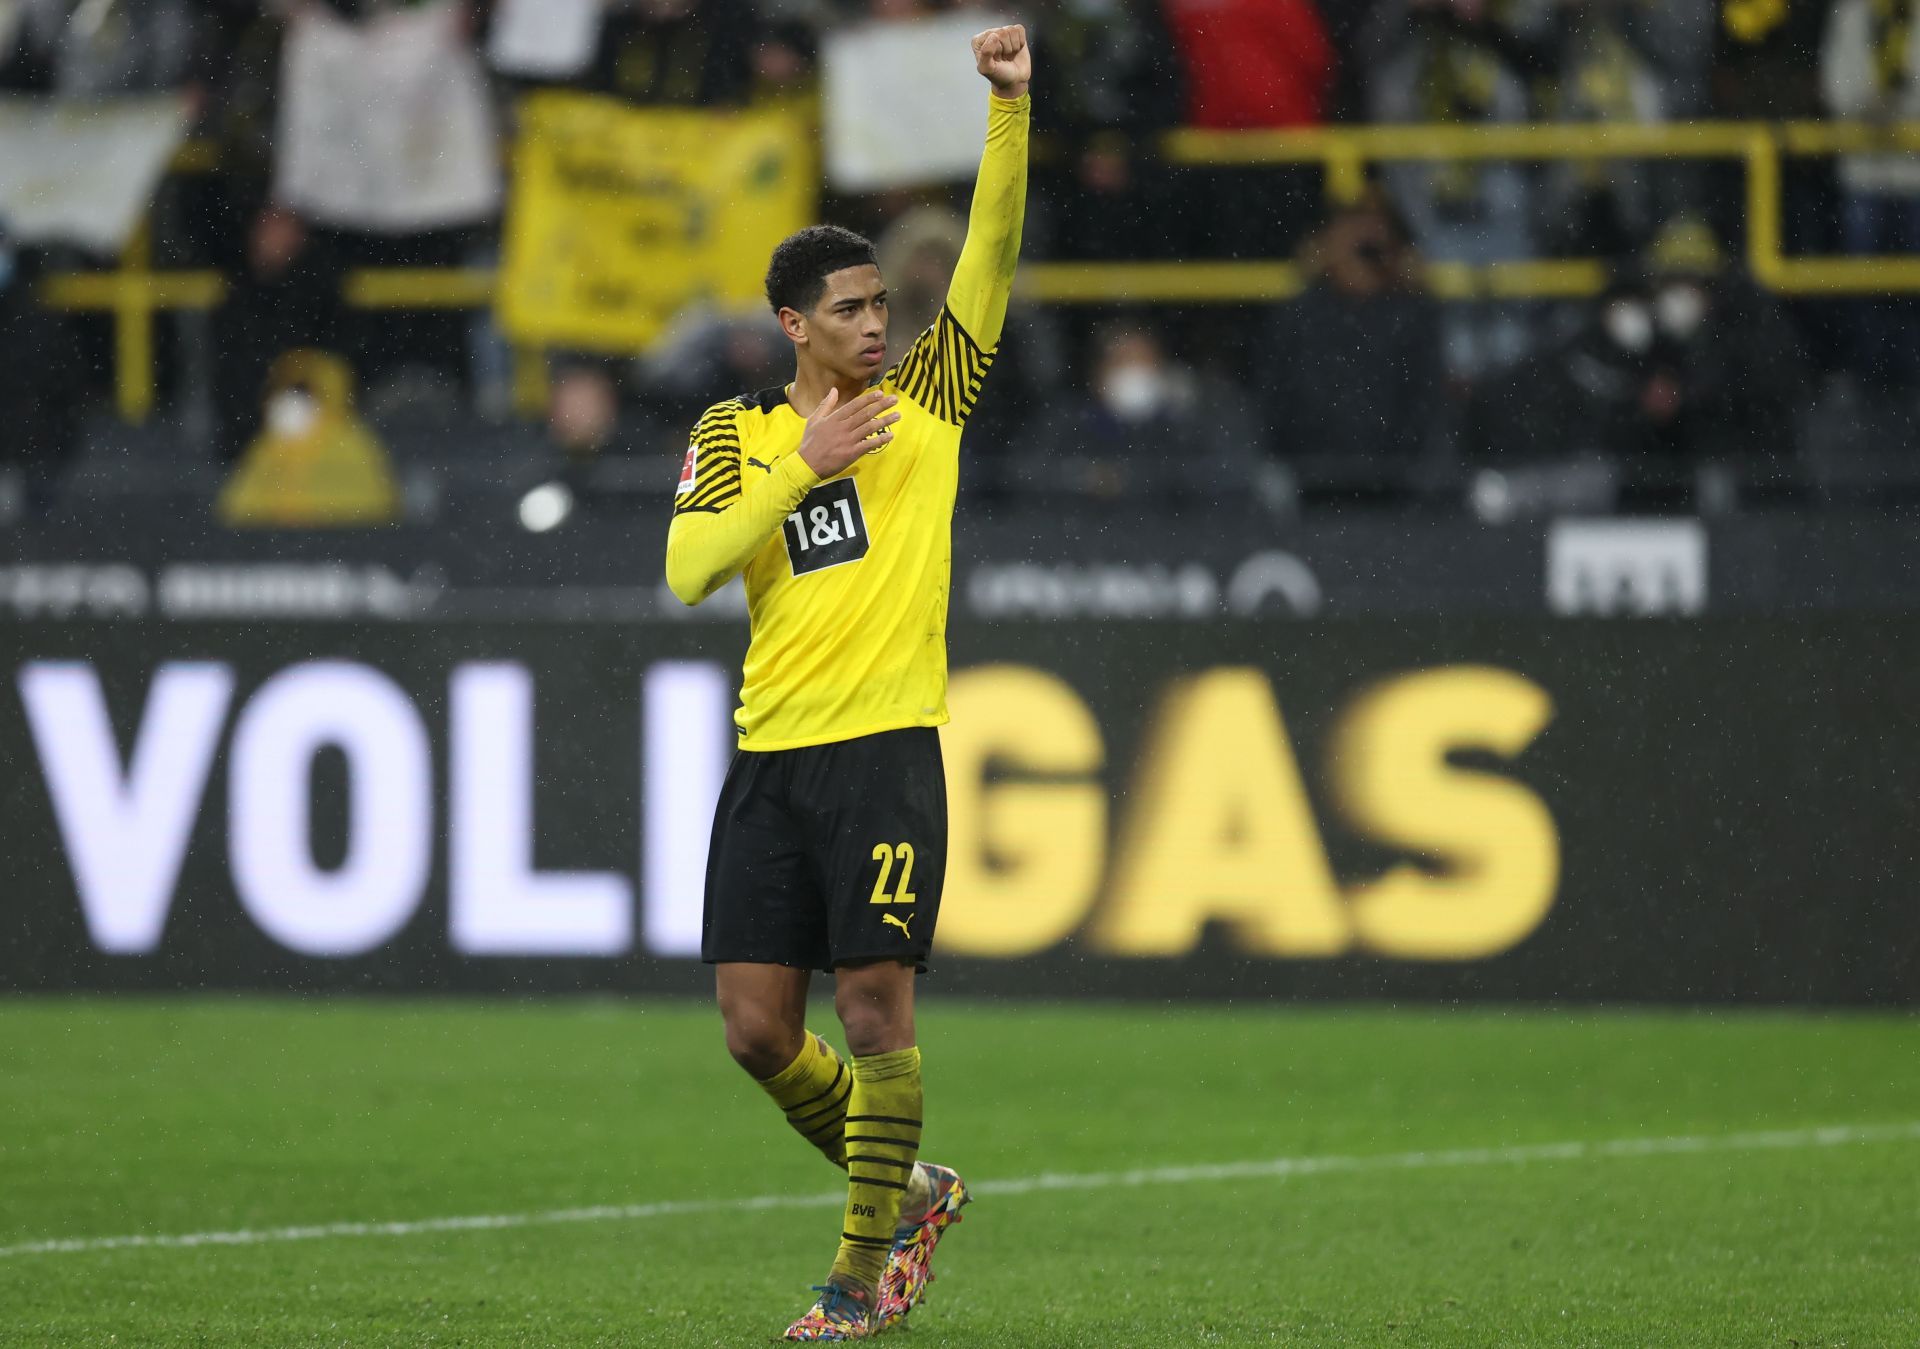 Jude Bellingham has been outstanding for Borussia Dortmund this season.